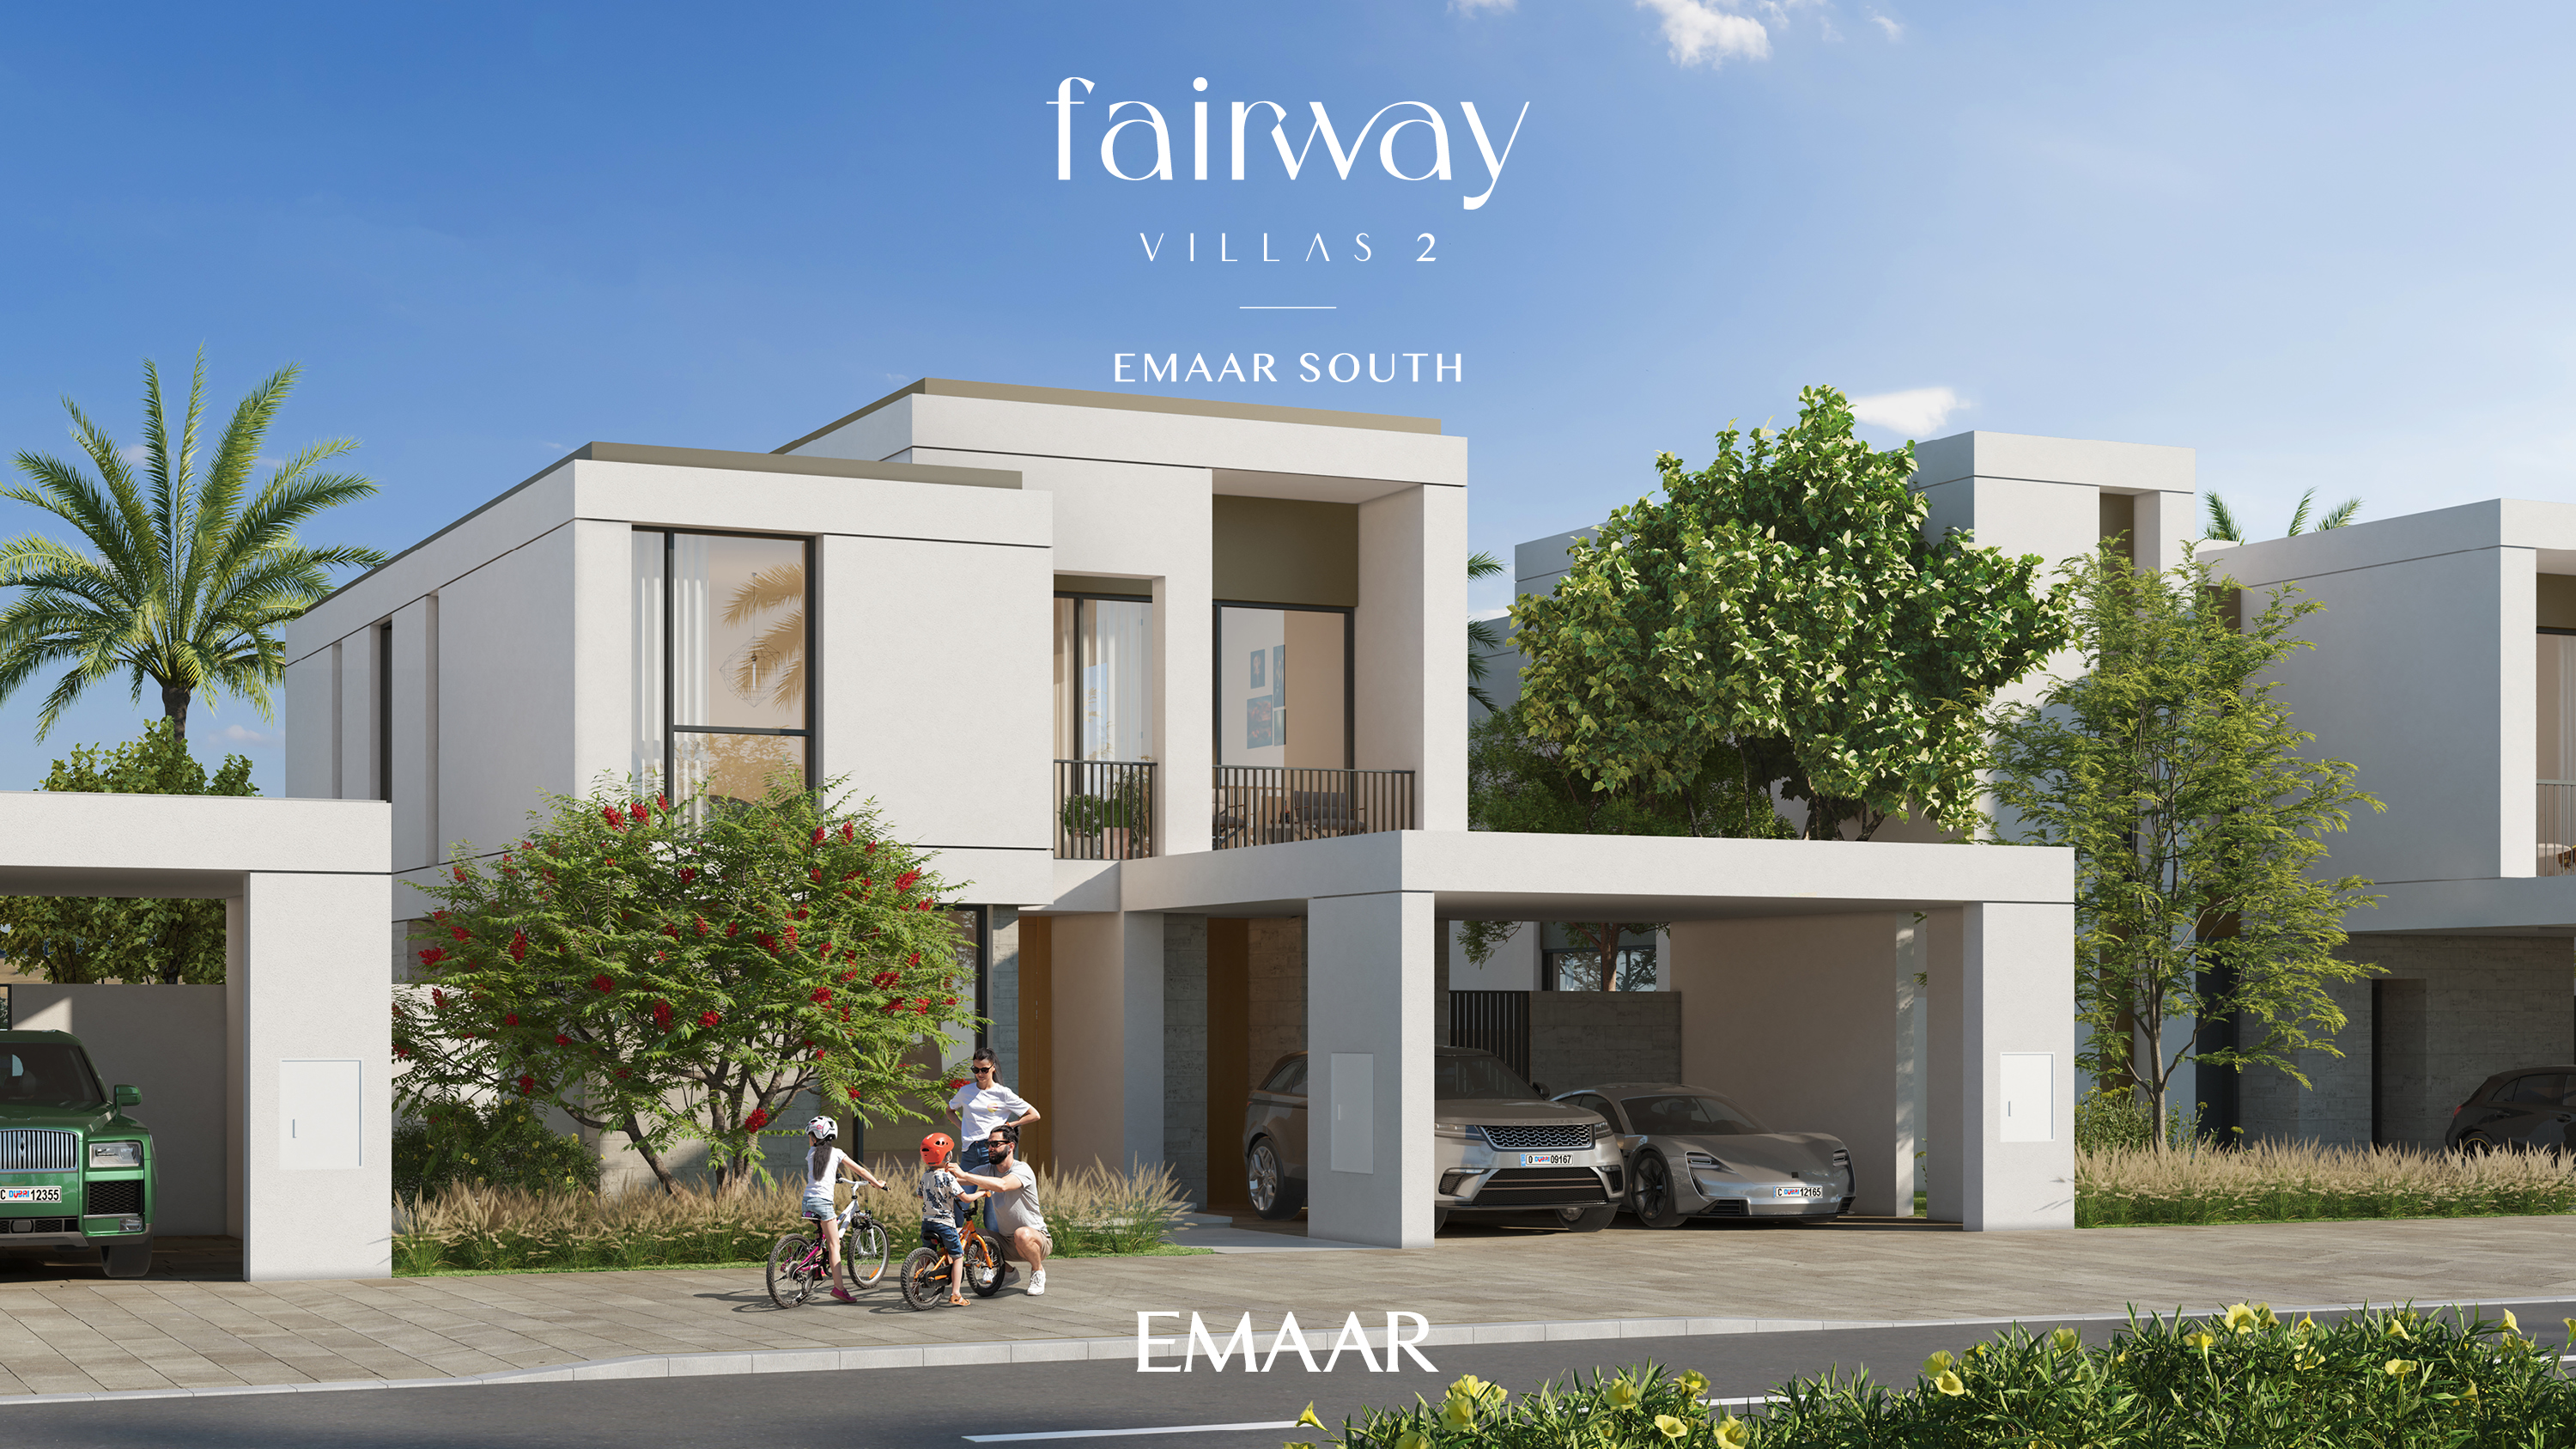 Fairway Villas 2 at Emaar South